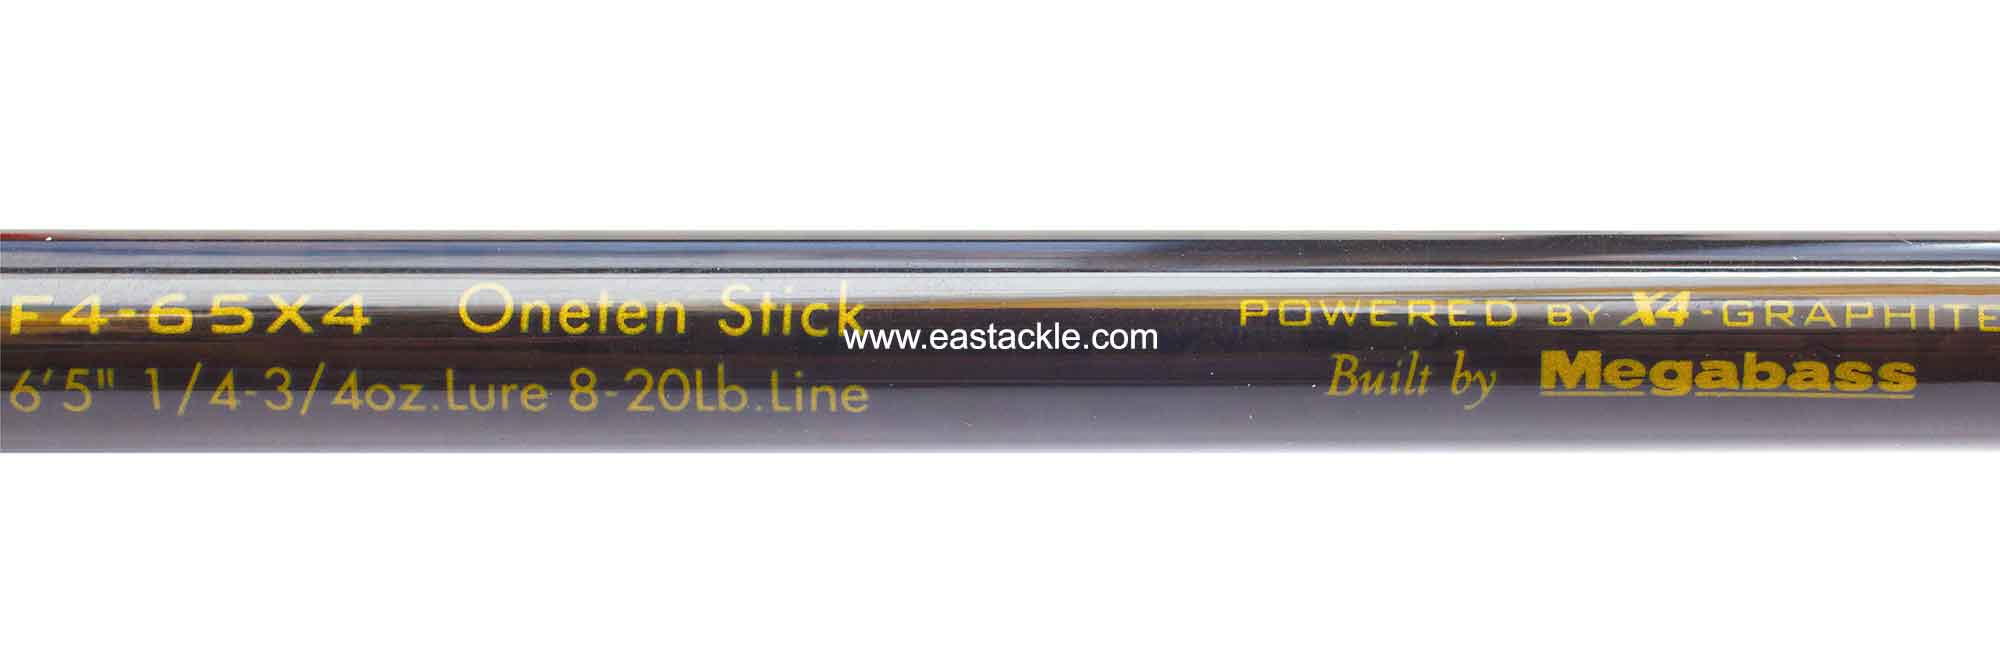 Megabass - Orochi X4 - F4-65X4 - ONETEN STICK - Bait Casting Rod - Blank Specifications